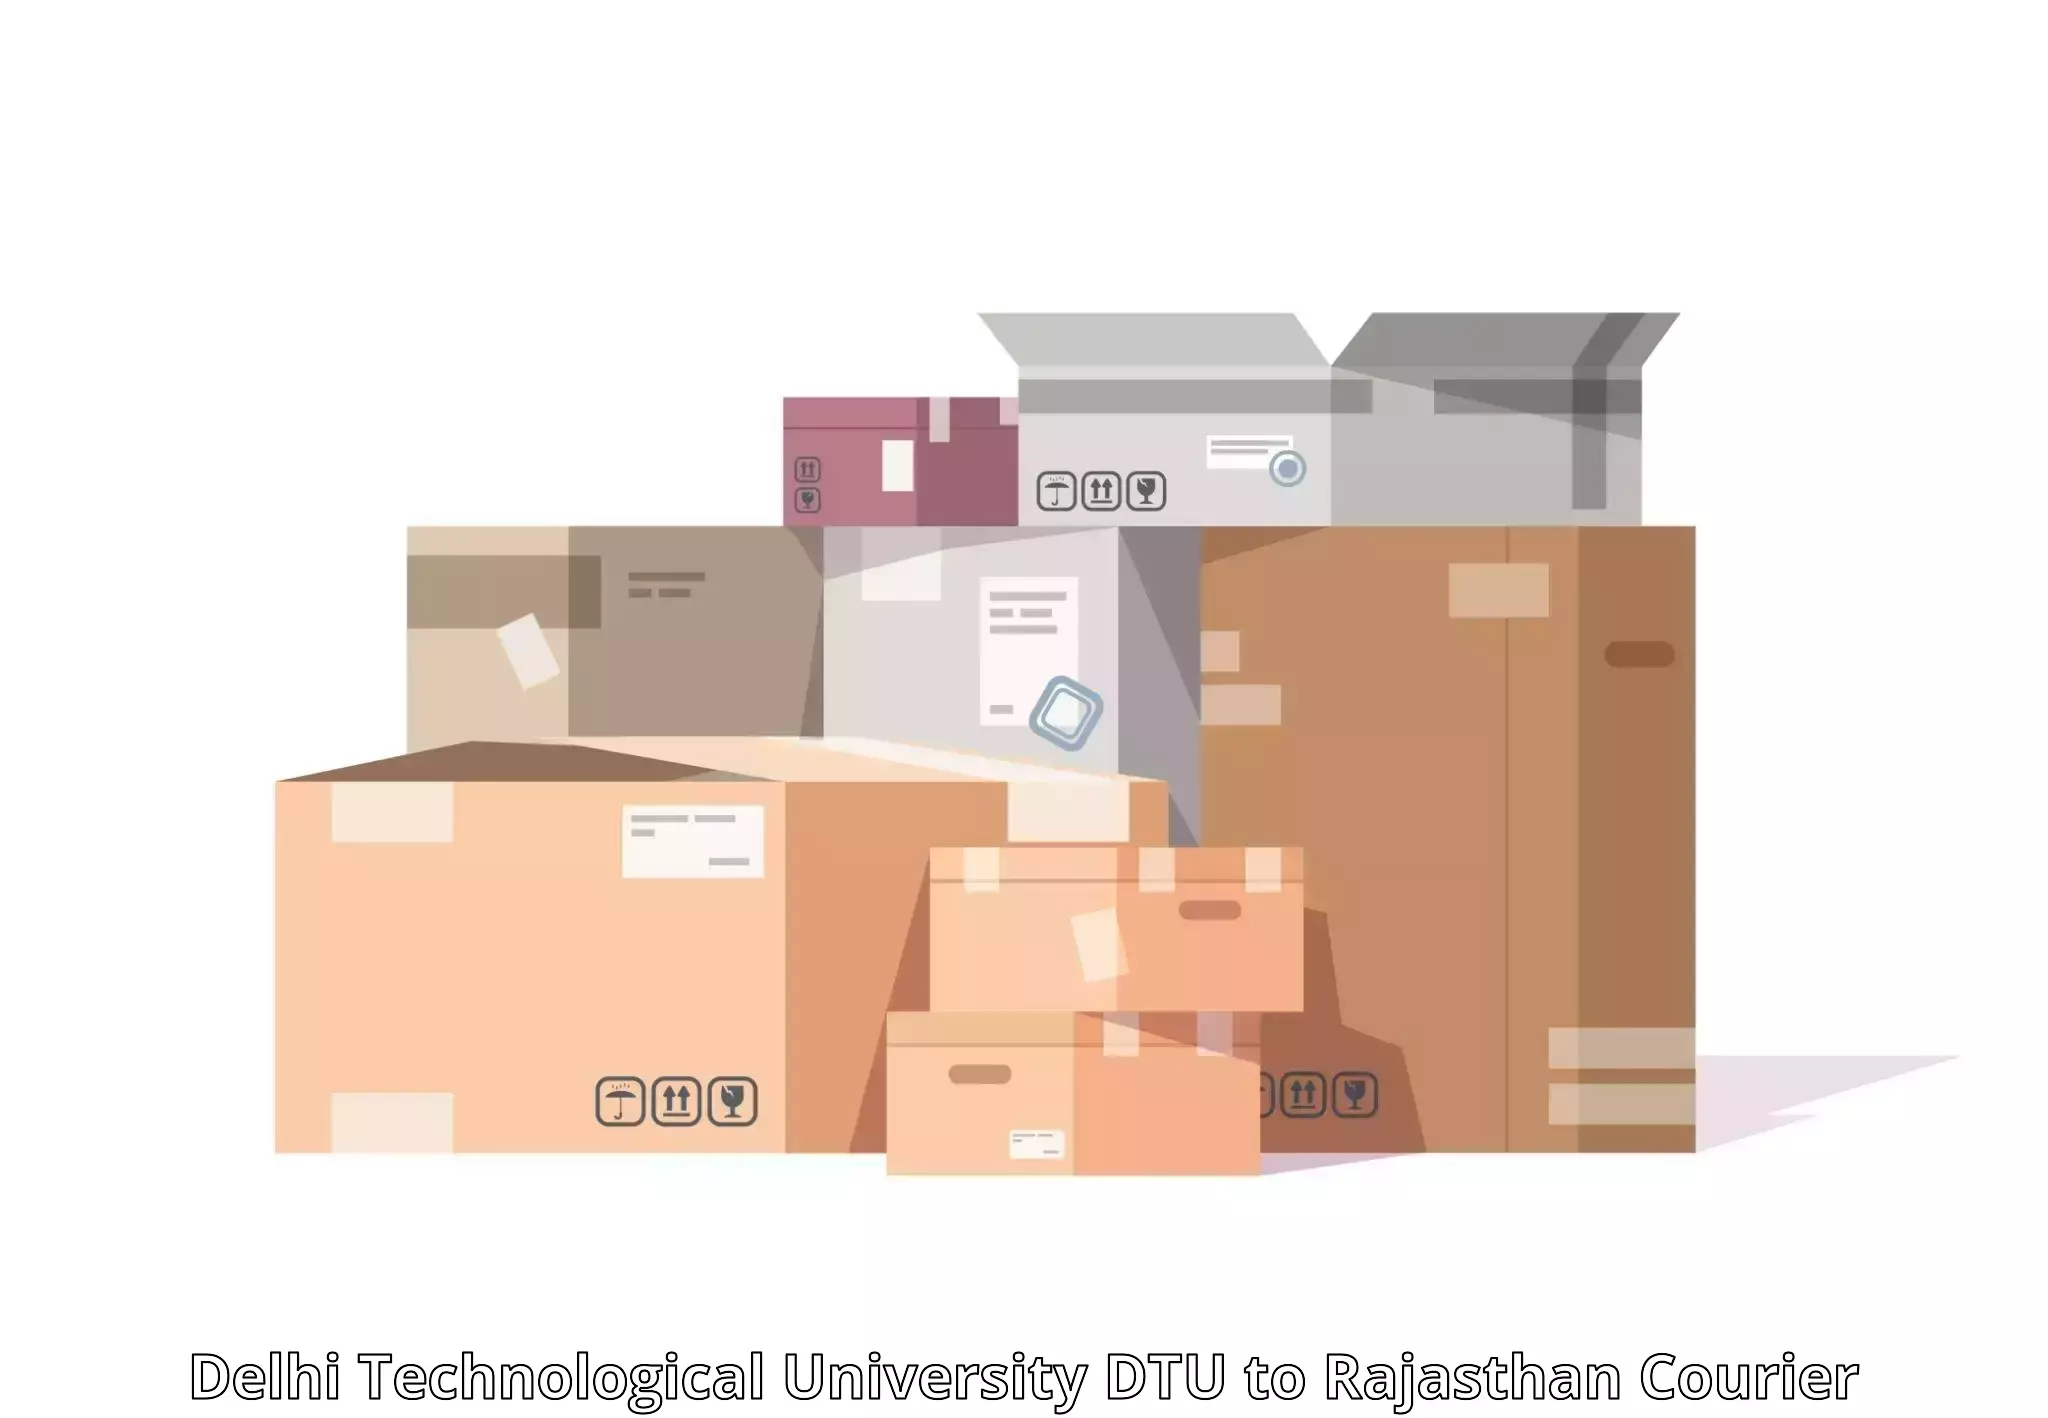 Secure freight services Delhi Technological University DTU to Behror